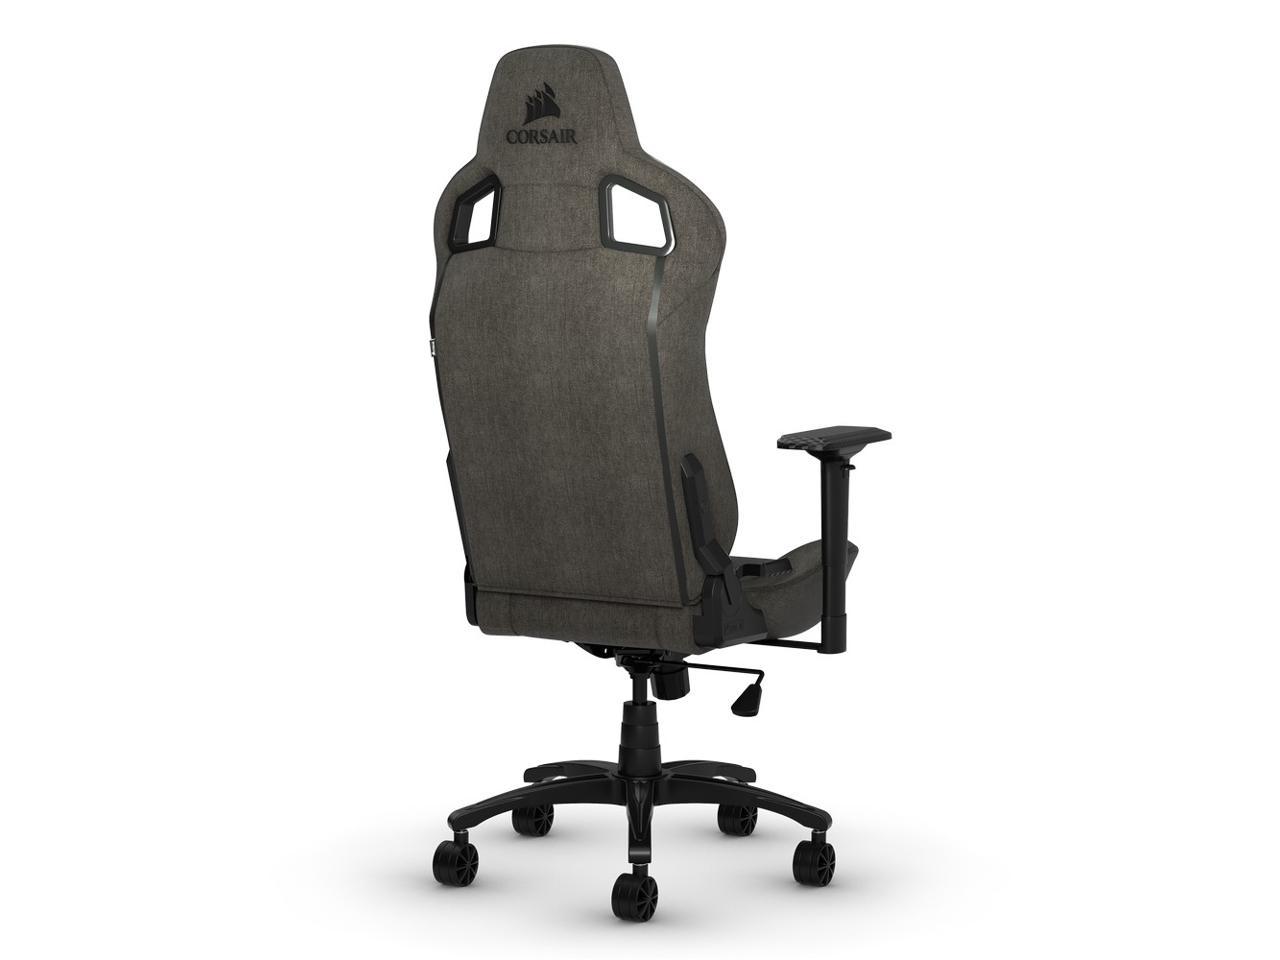 Corsair T3 Rush Gaming Chair - Charcoal Fabric - CF-9010057-WW - image 2 of 4